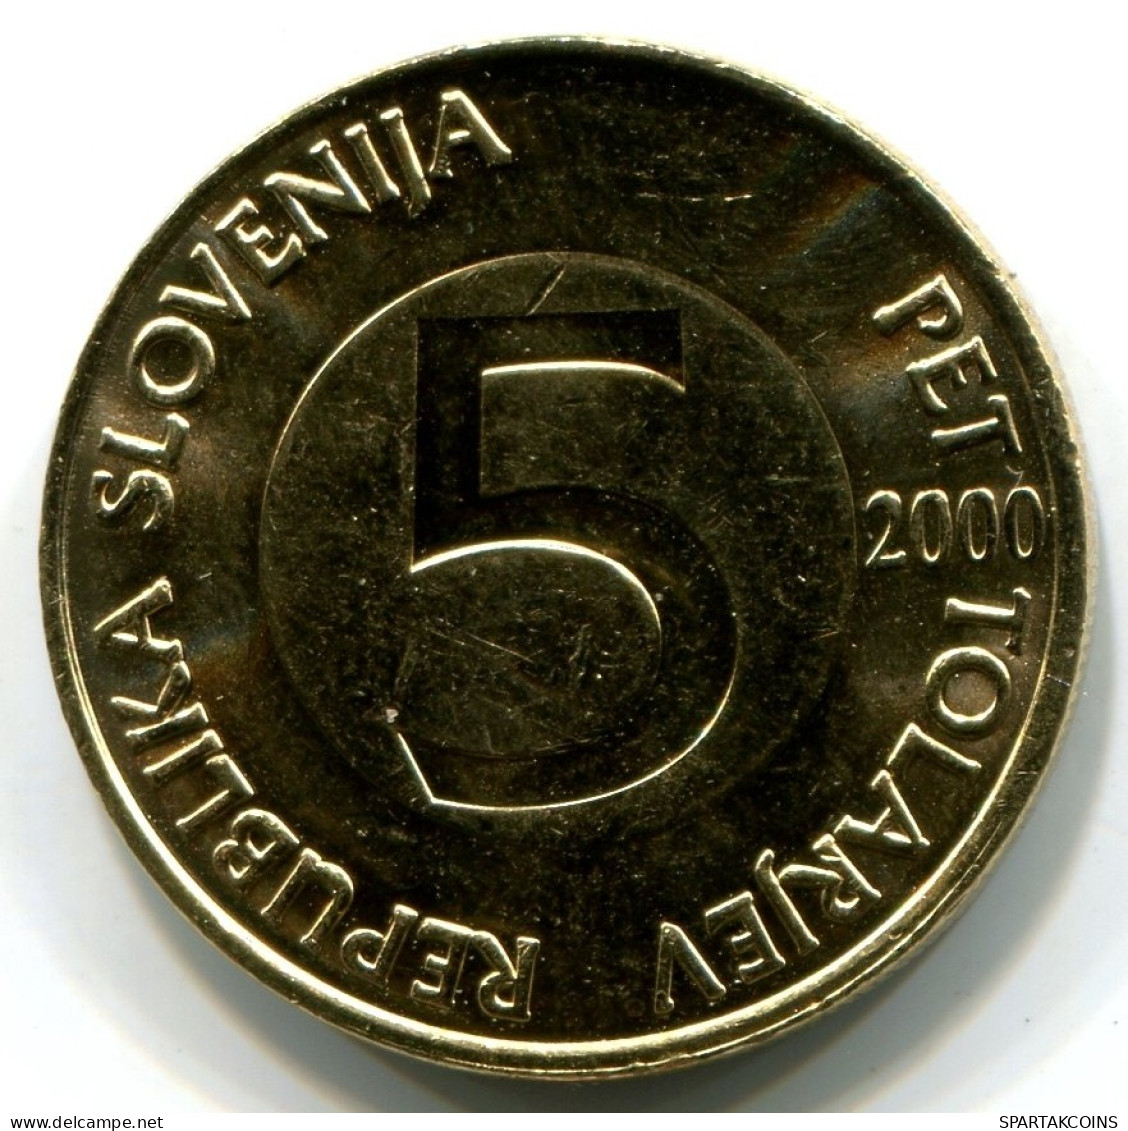 5 TOLAR 2000 SLOVENIA UNC Coin HEAD CAPRICORN #W11093.U.A - Slowenien